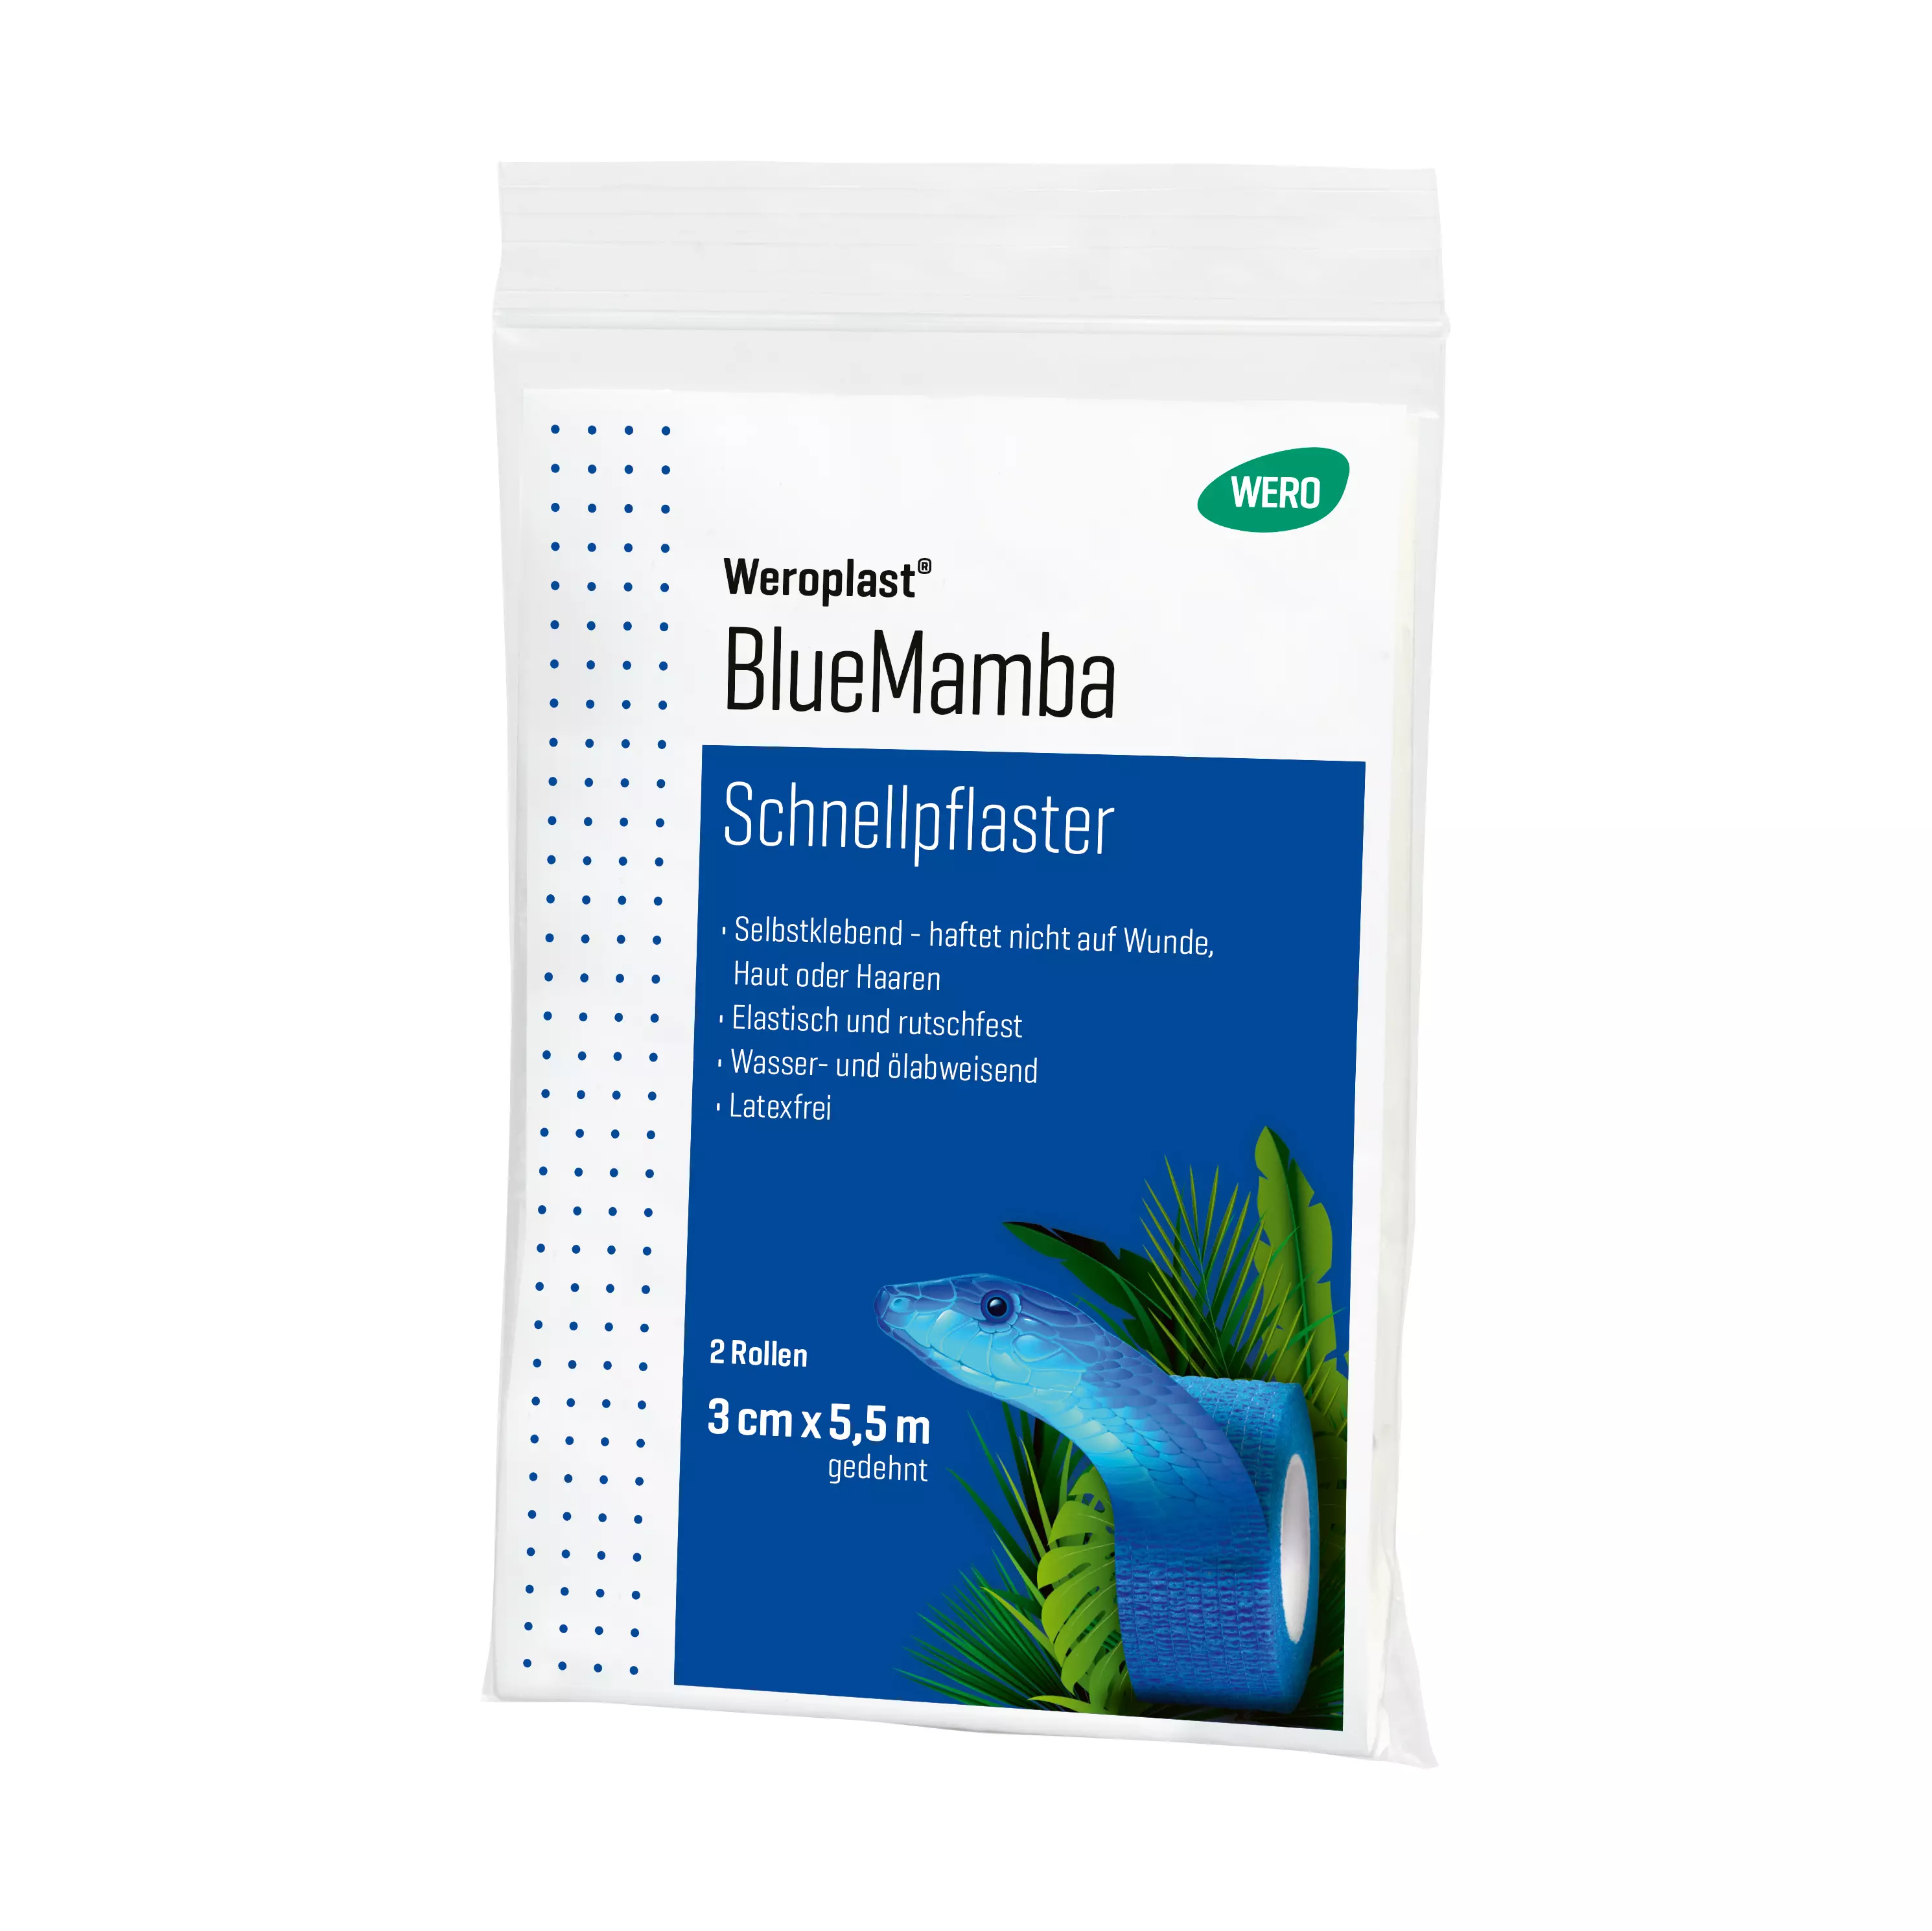 Weroplast® BlueMamba quick plasters - 12 pcs